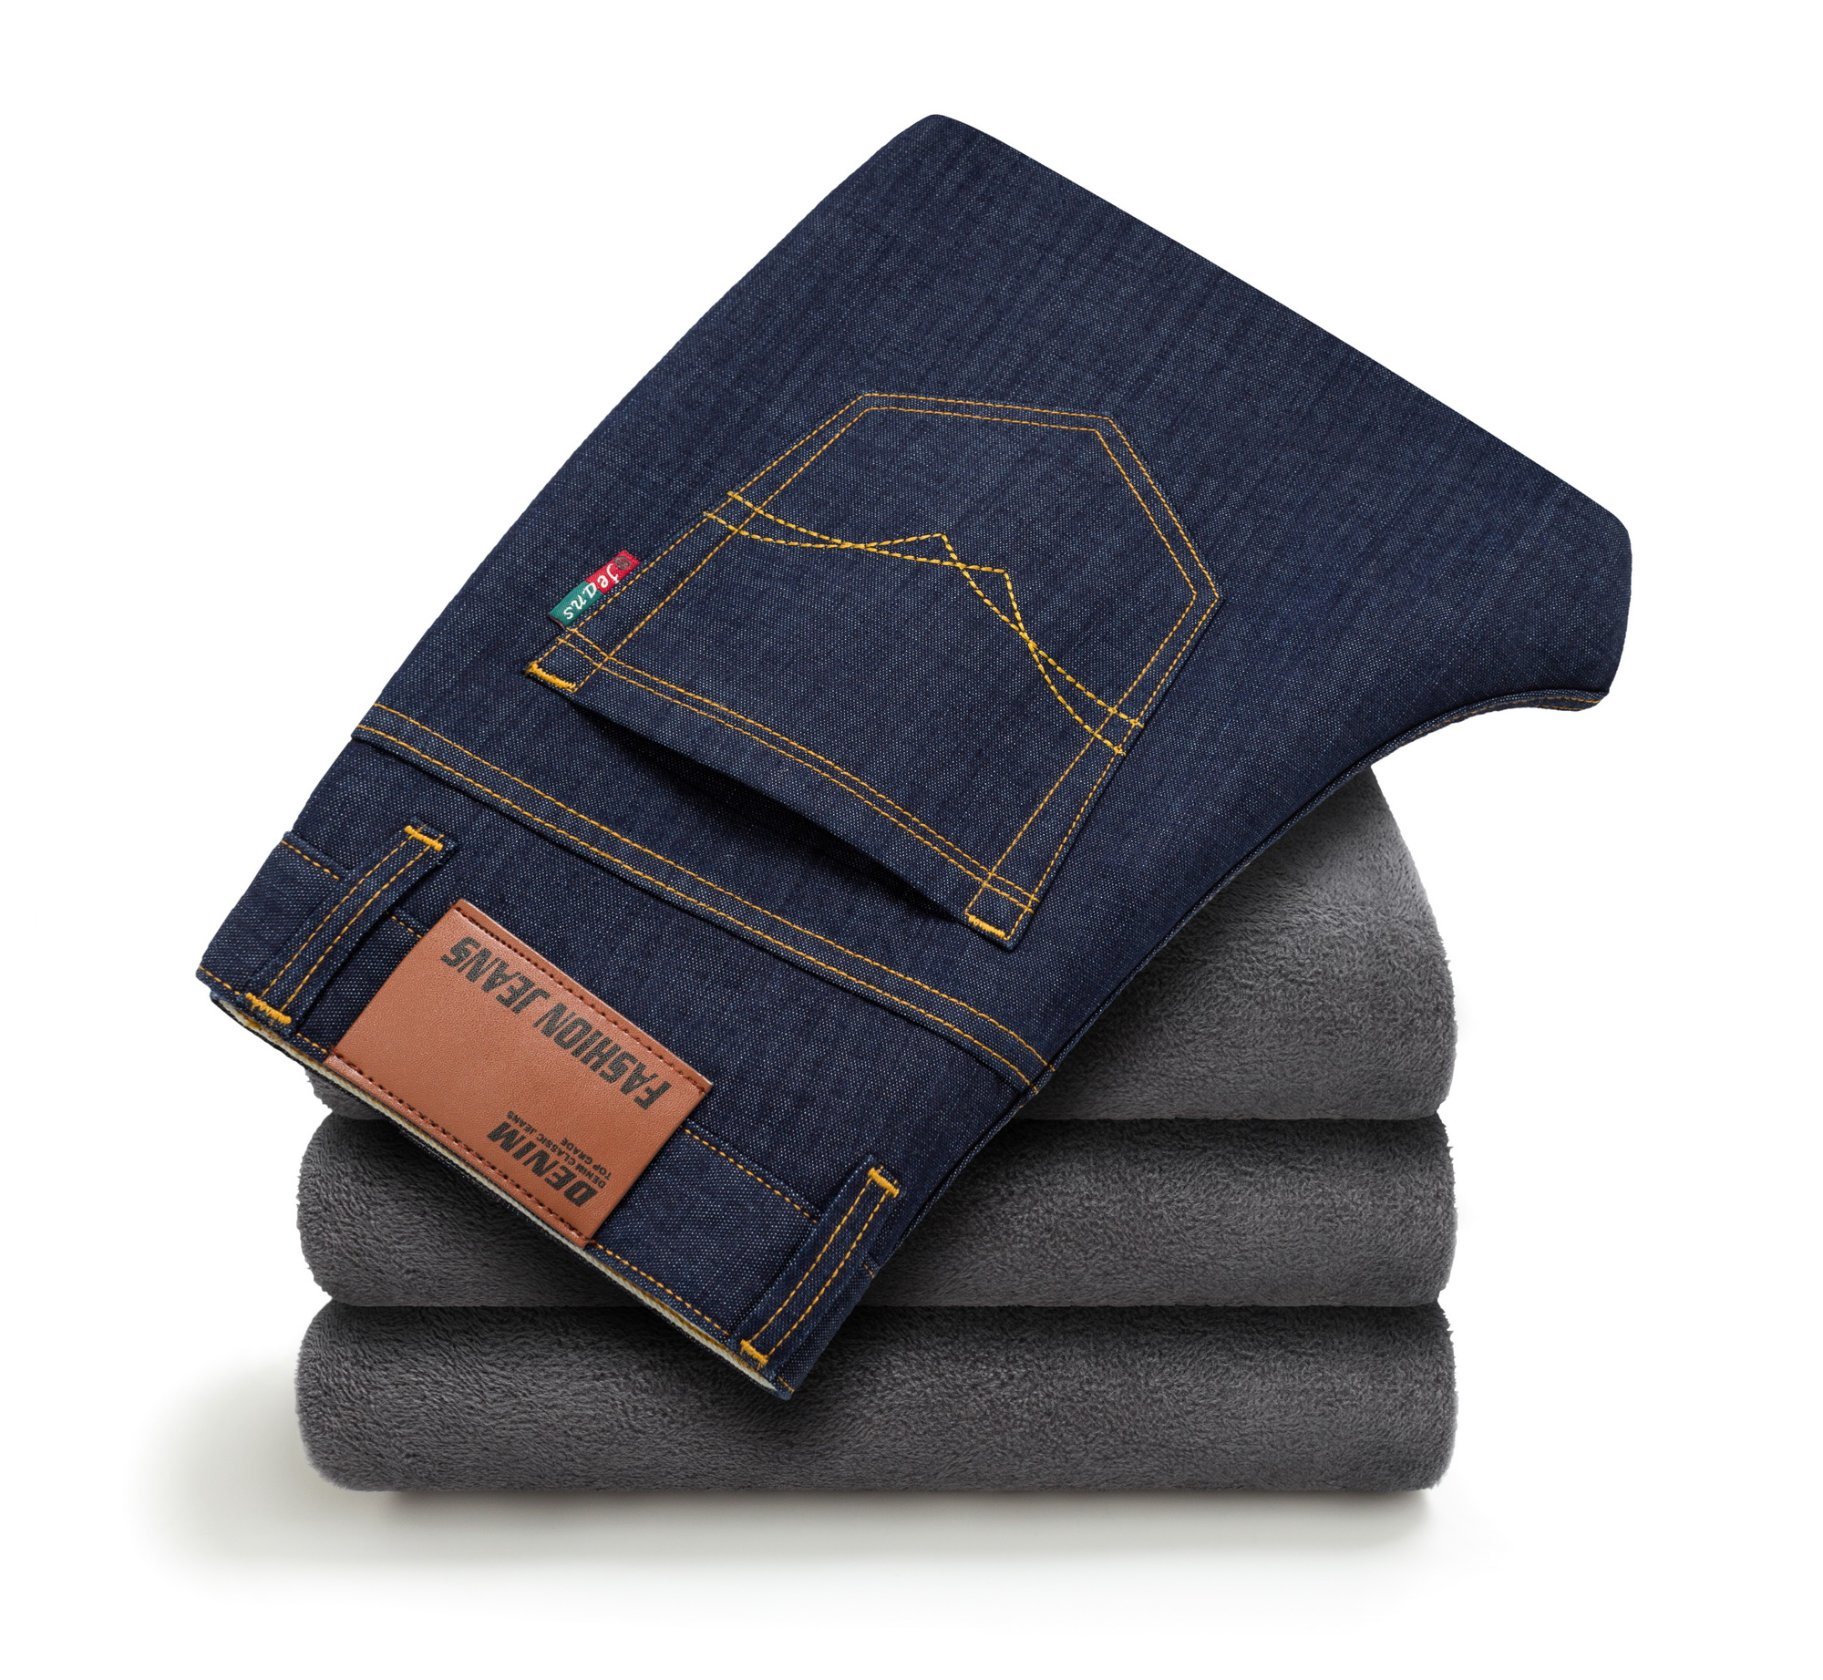 D826 Winter Thick Denim Jeans Men's Classic Regular-Fit Jean